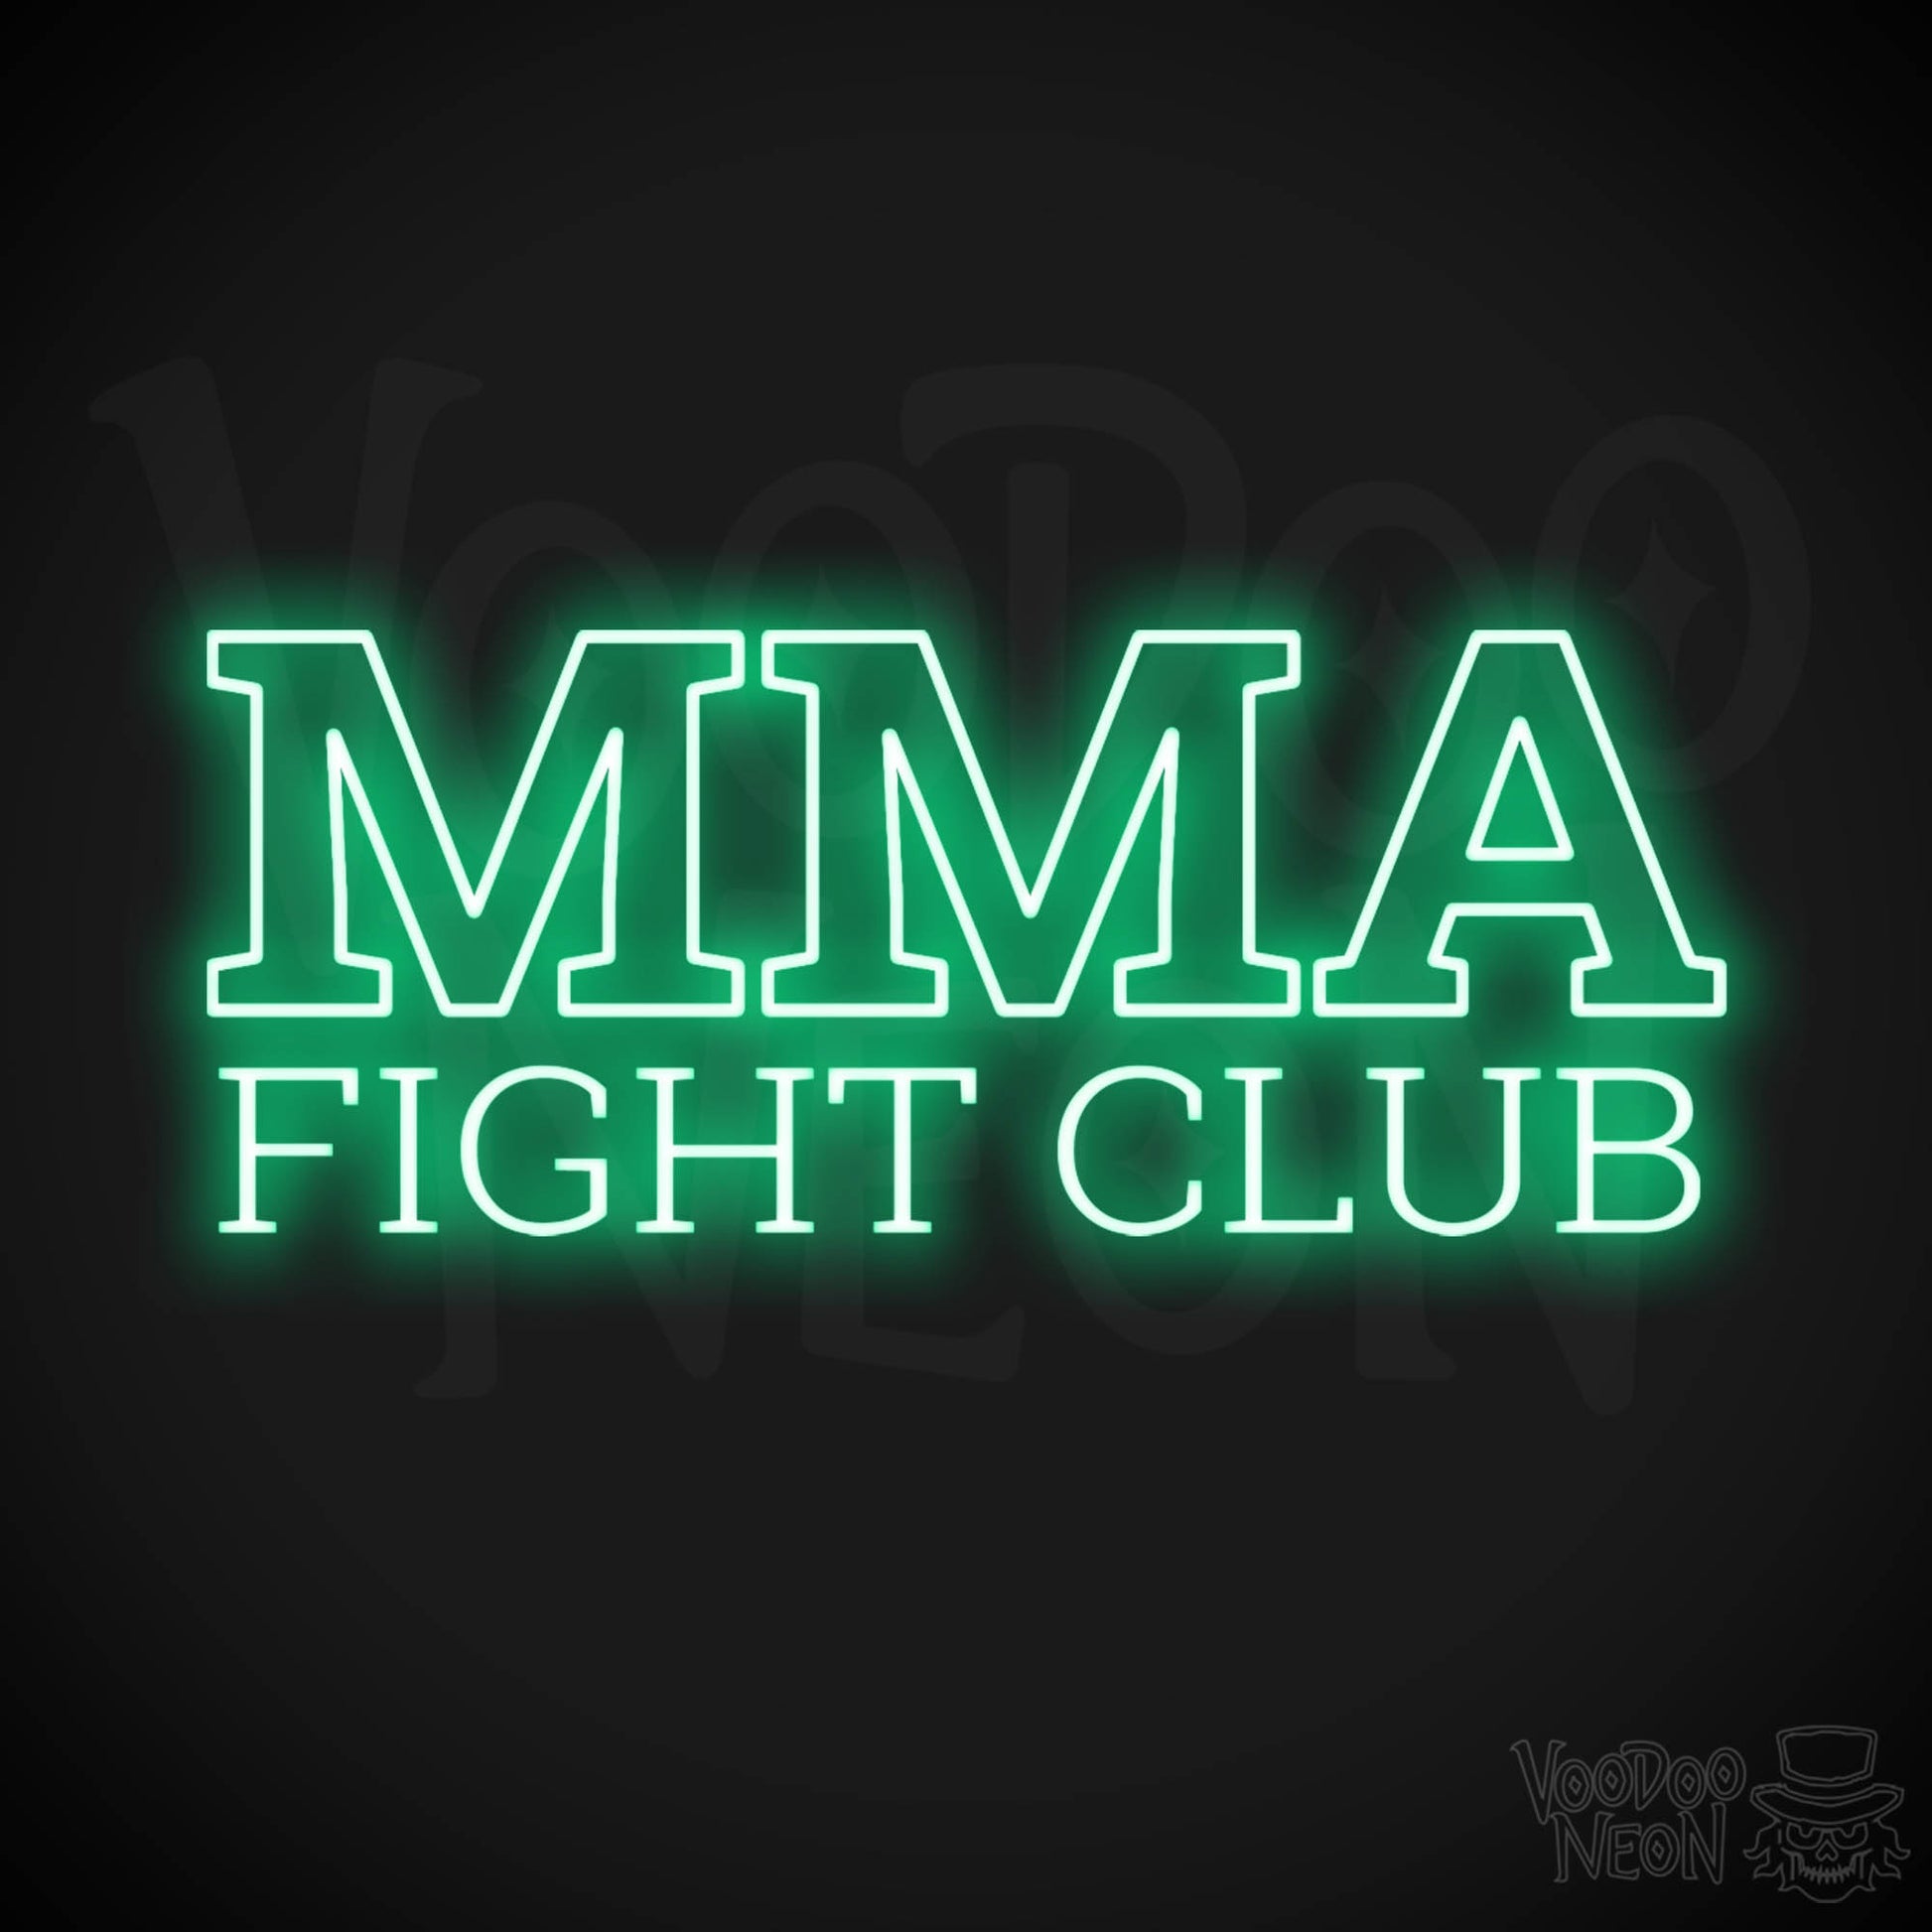 MMA Gym LED Neon - Green